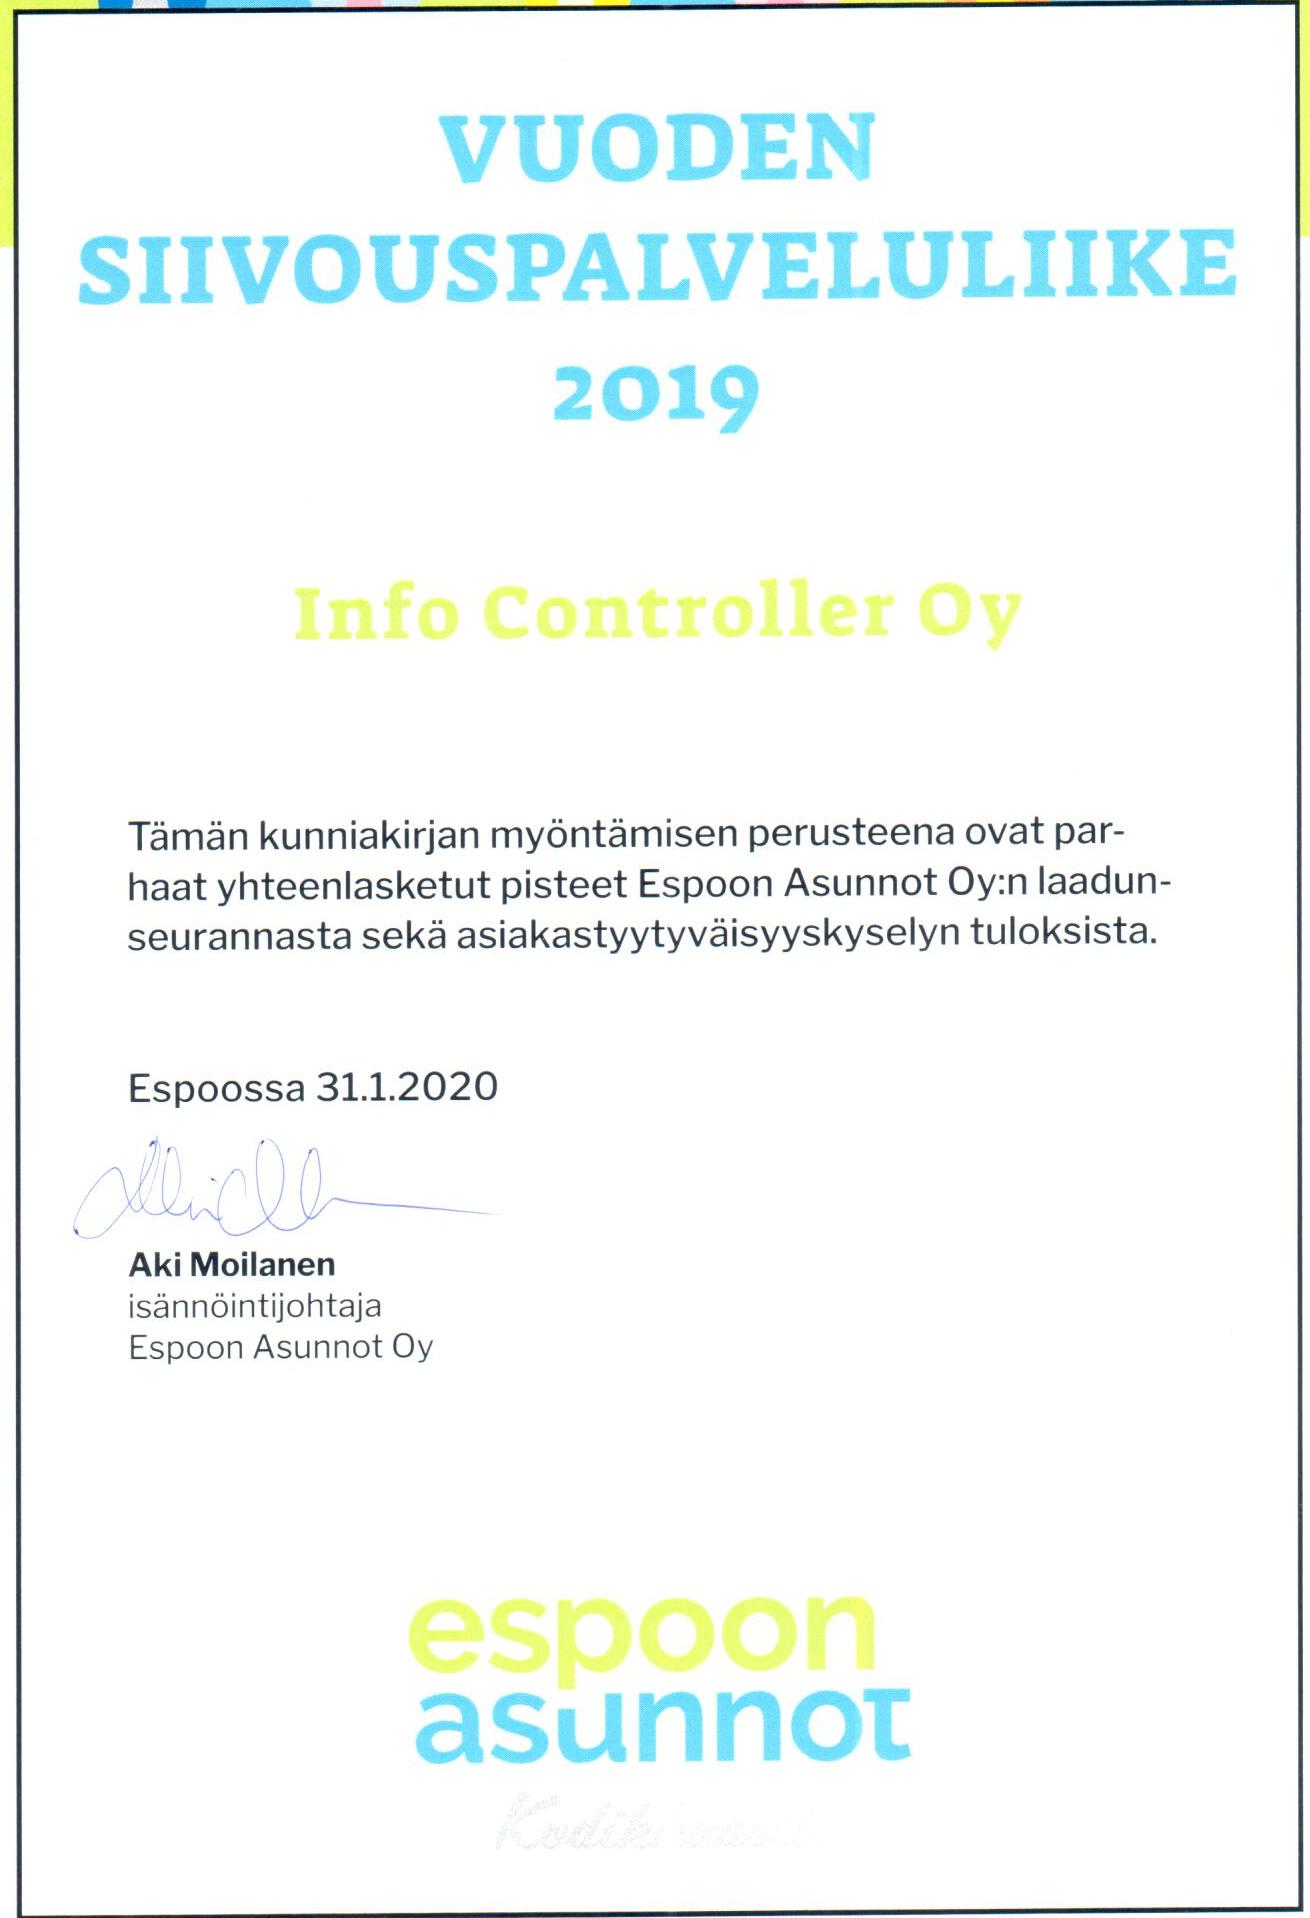 Quality award 2019, IC Siivous, Helsinki